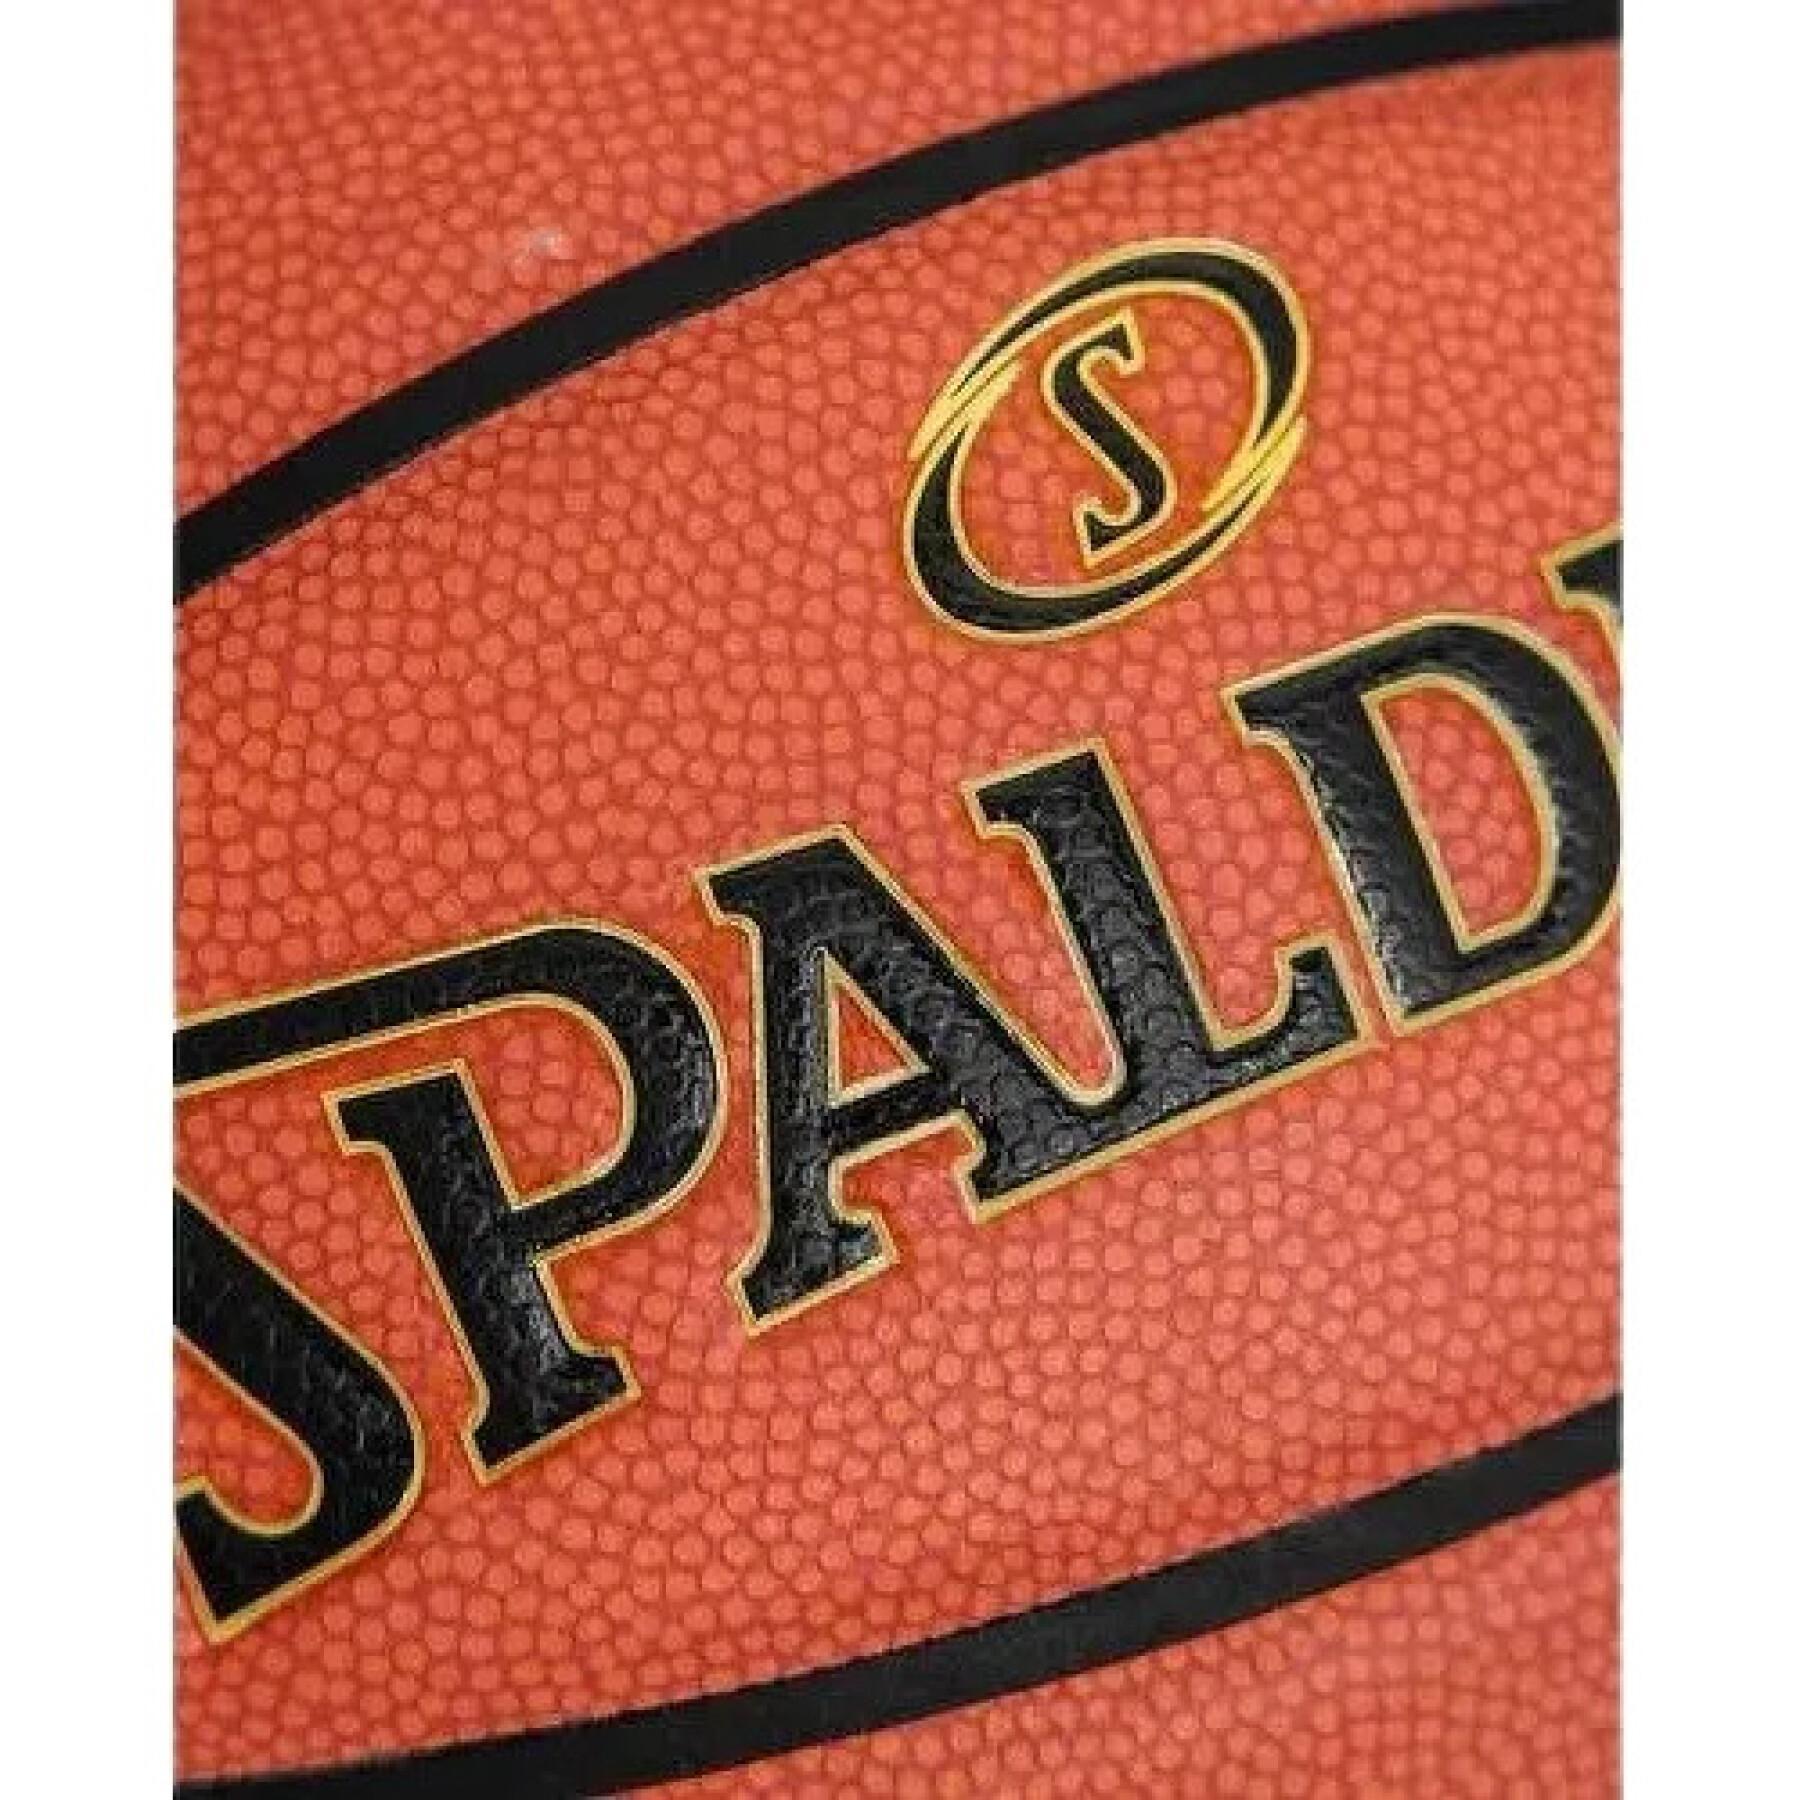 Pallone da basket Spalding TF-1000 Legacy Composite